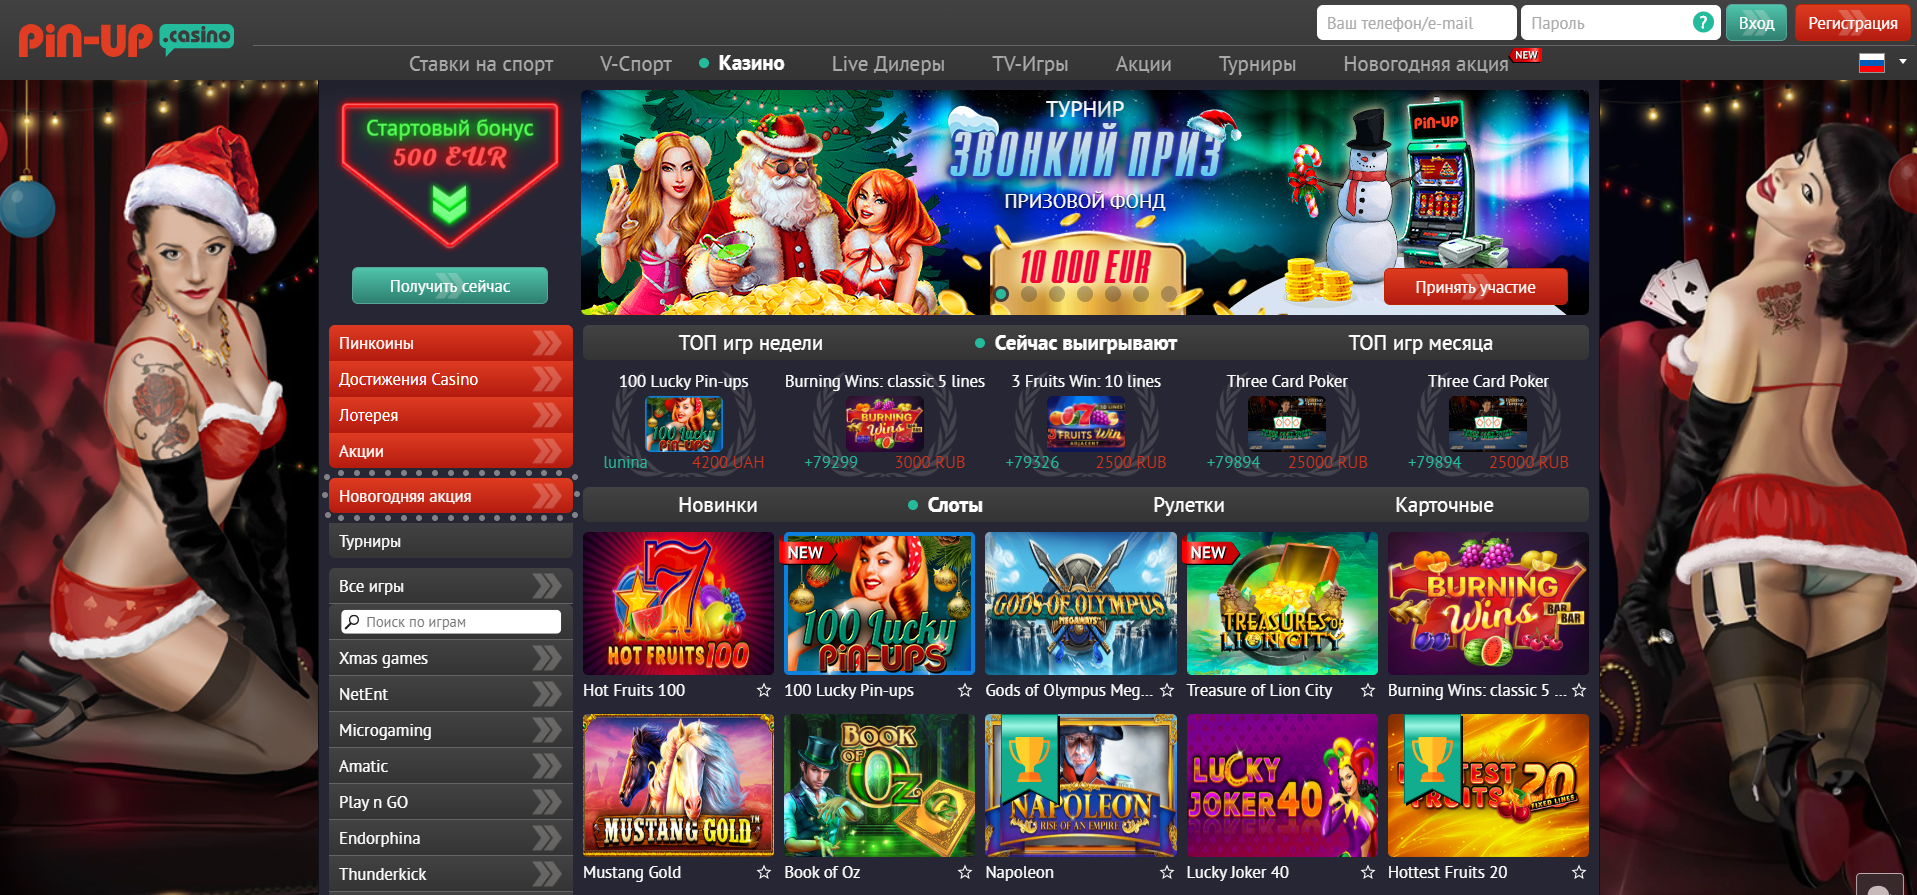 пинап козино casino pin up official site